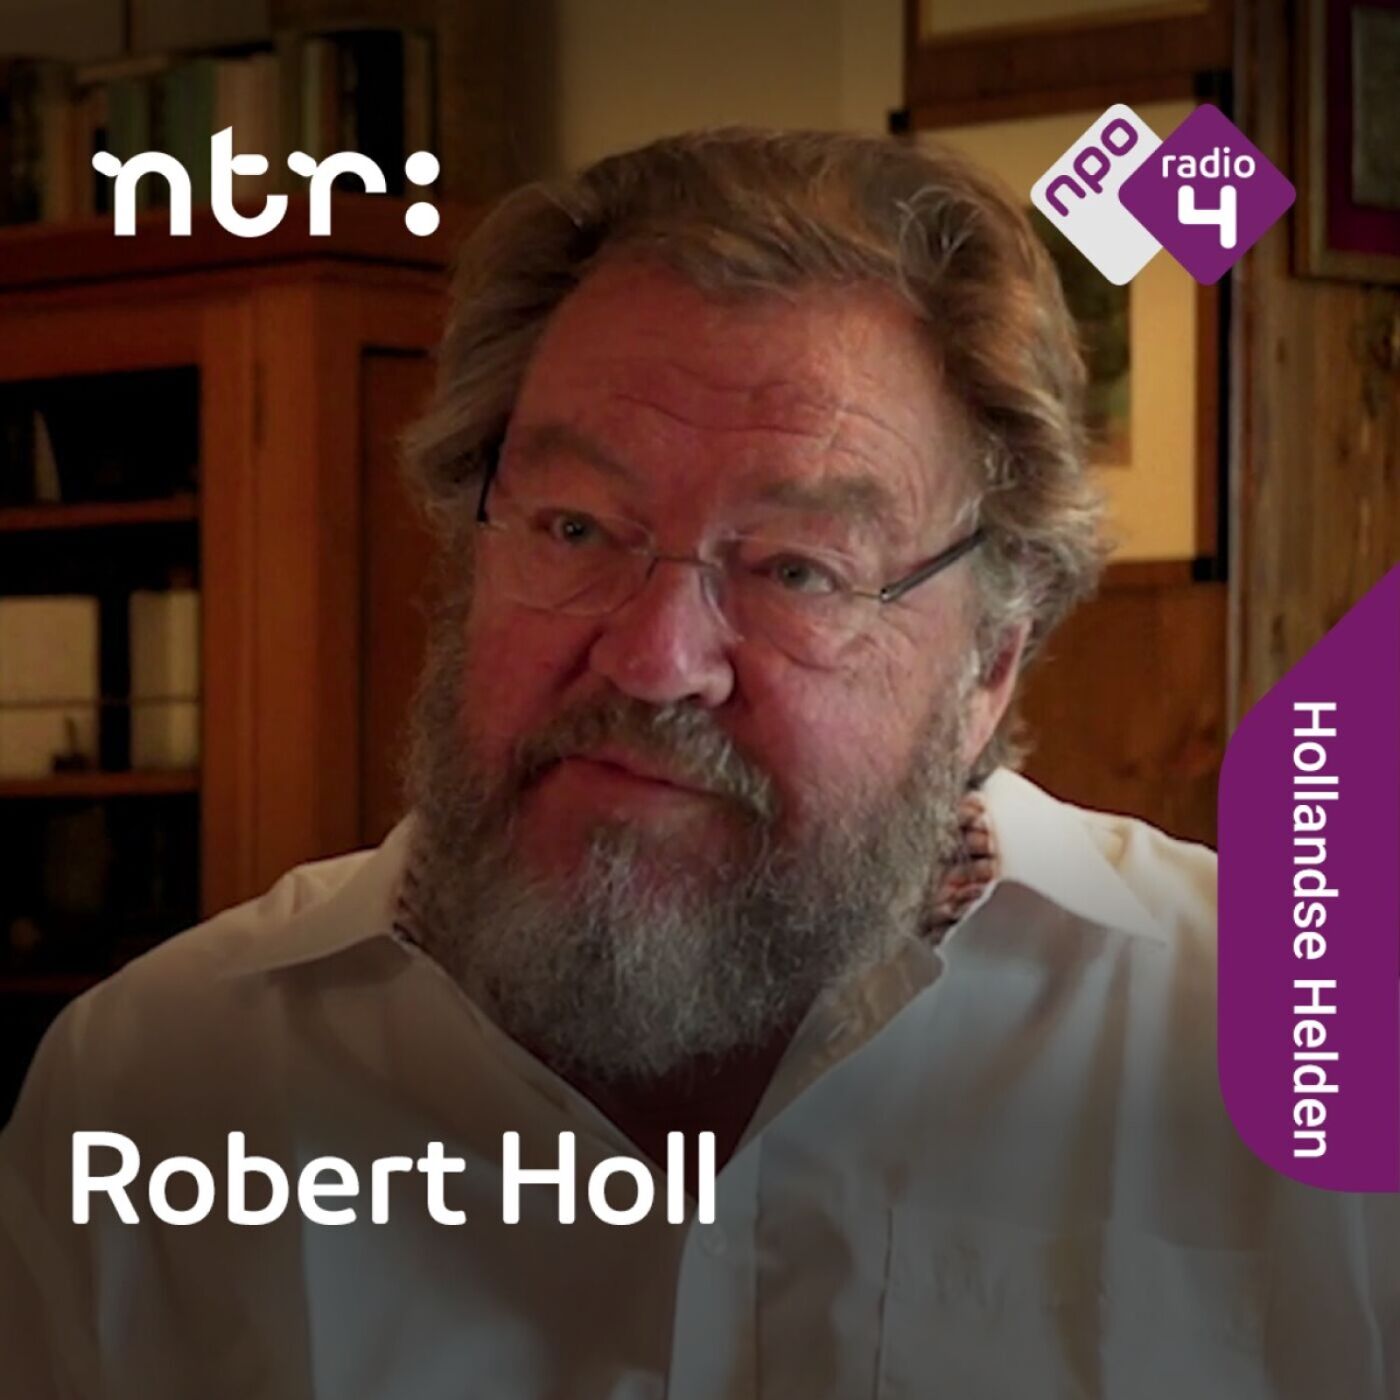 #2 - Robert Holl - De nachttrein naar München